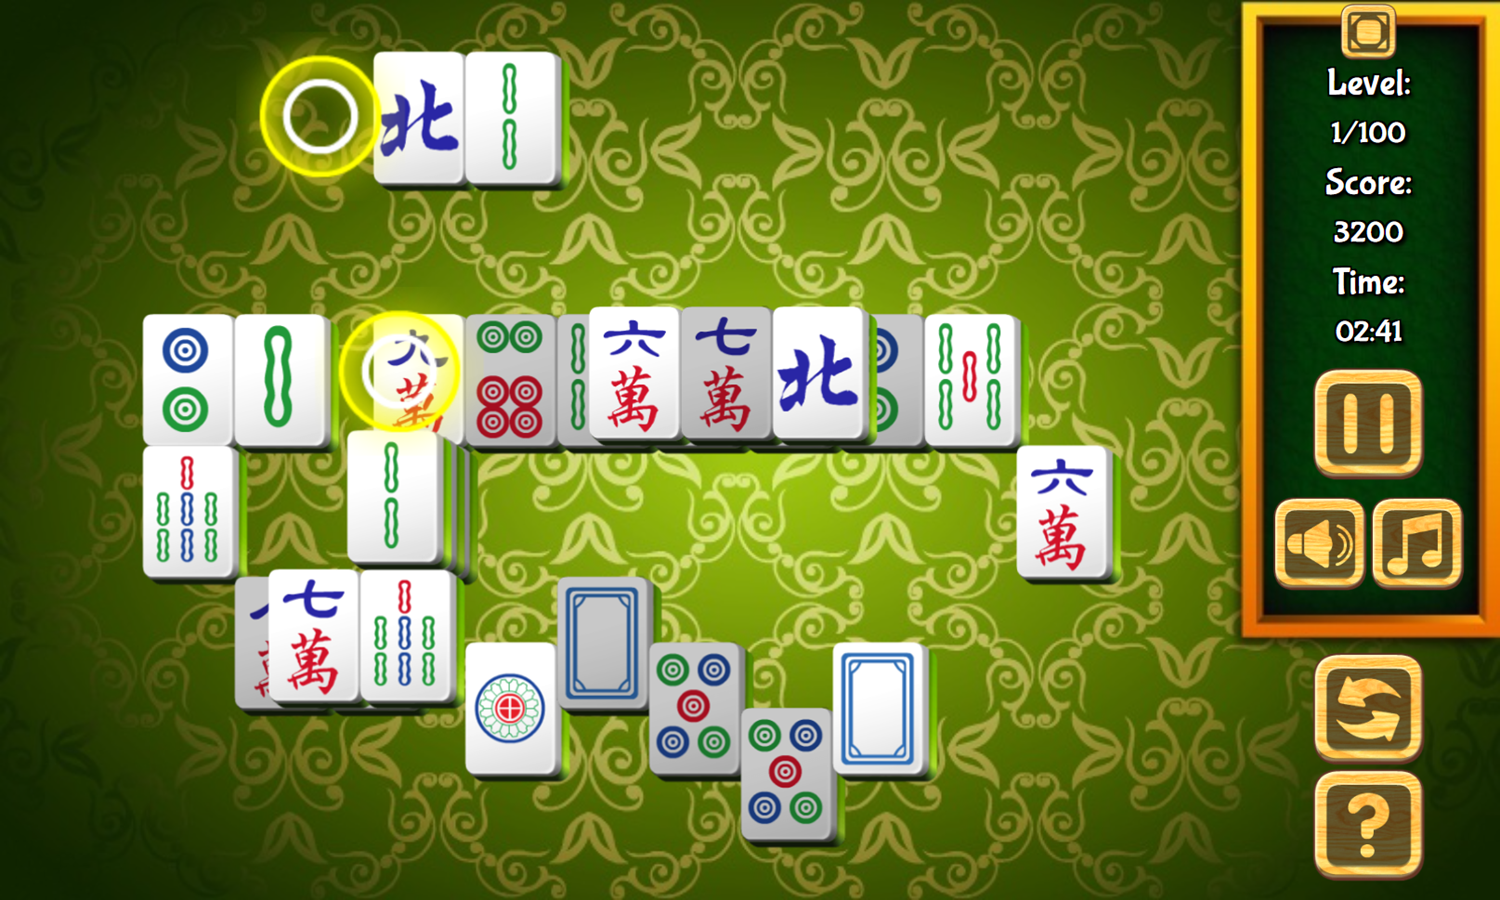 Mahjong Tiles Game Level Play Screenshot.